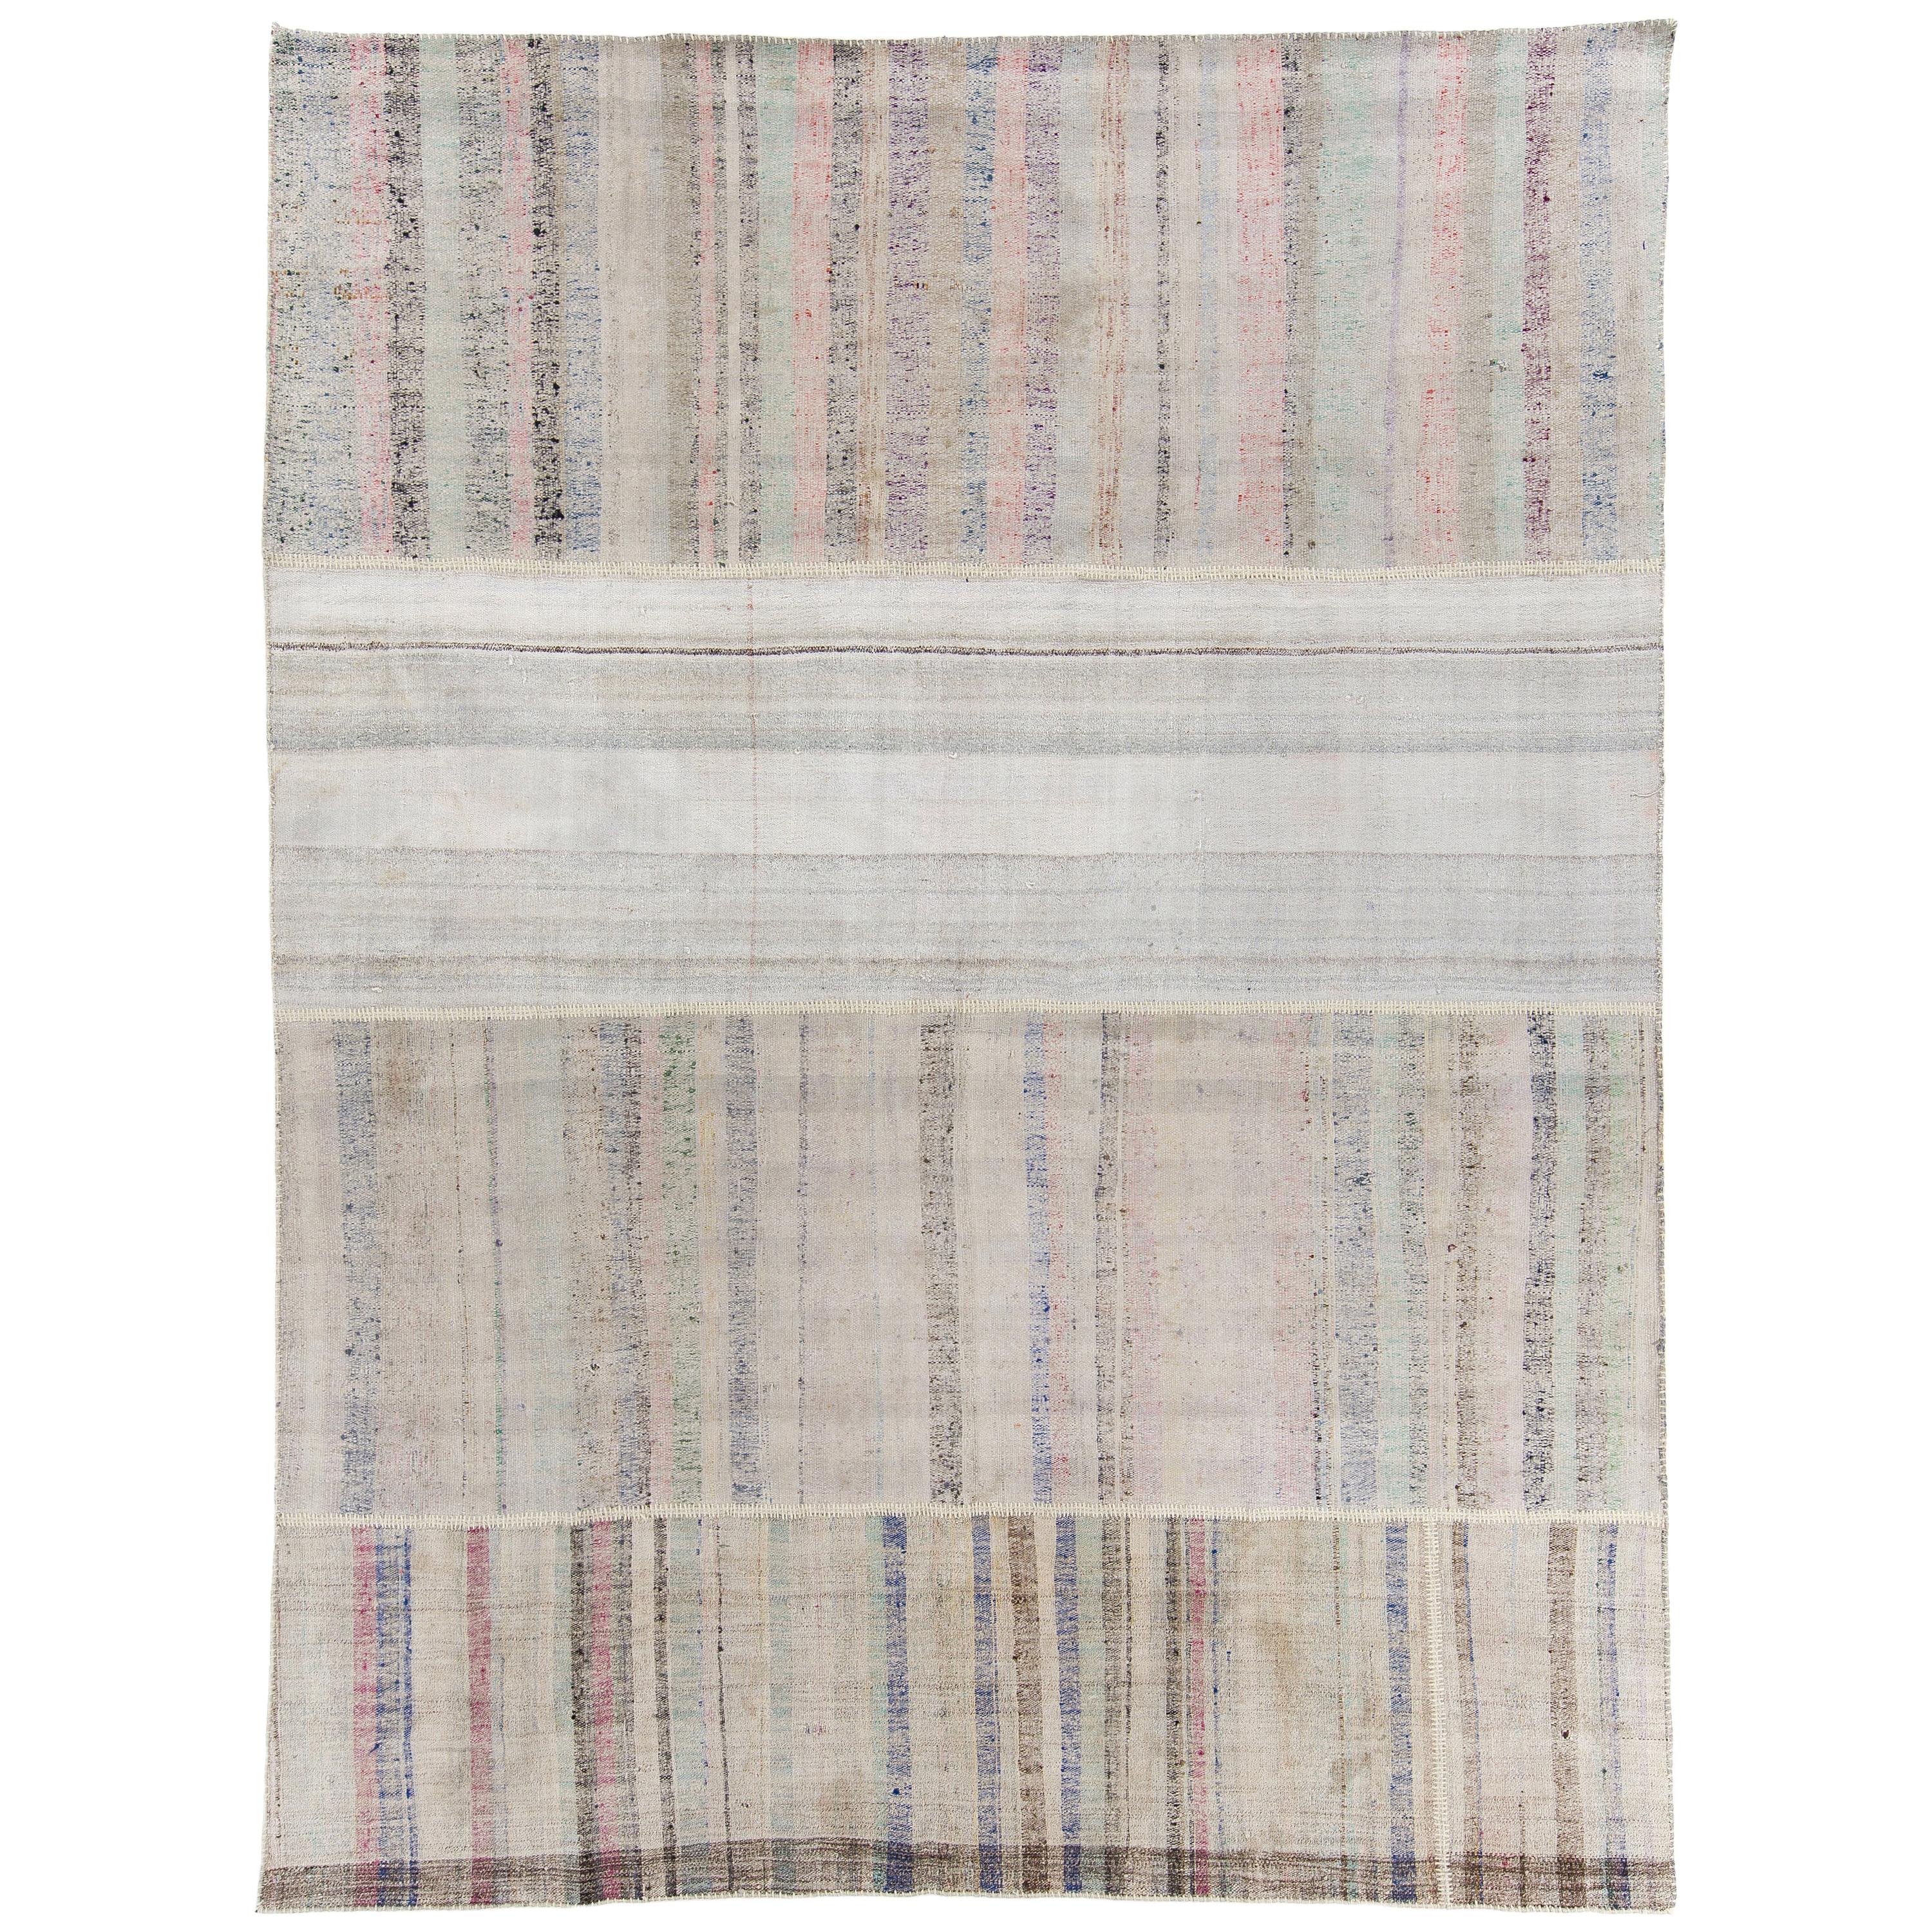 9.2x12.2 Ft Vintage Cotton Rag Rug with Colorful Stripes, Flat Weave Kilim For Sale